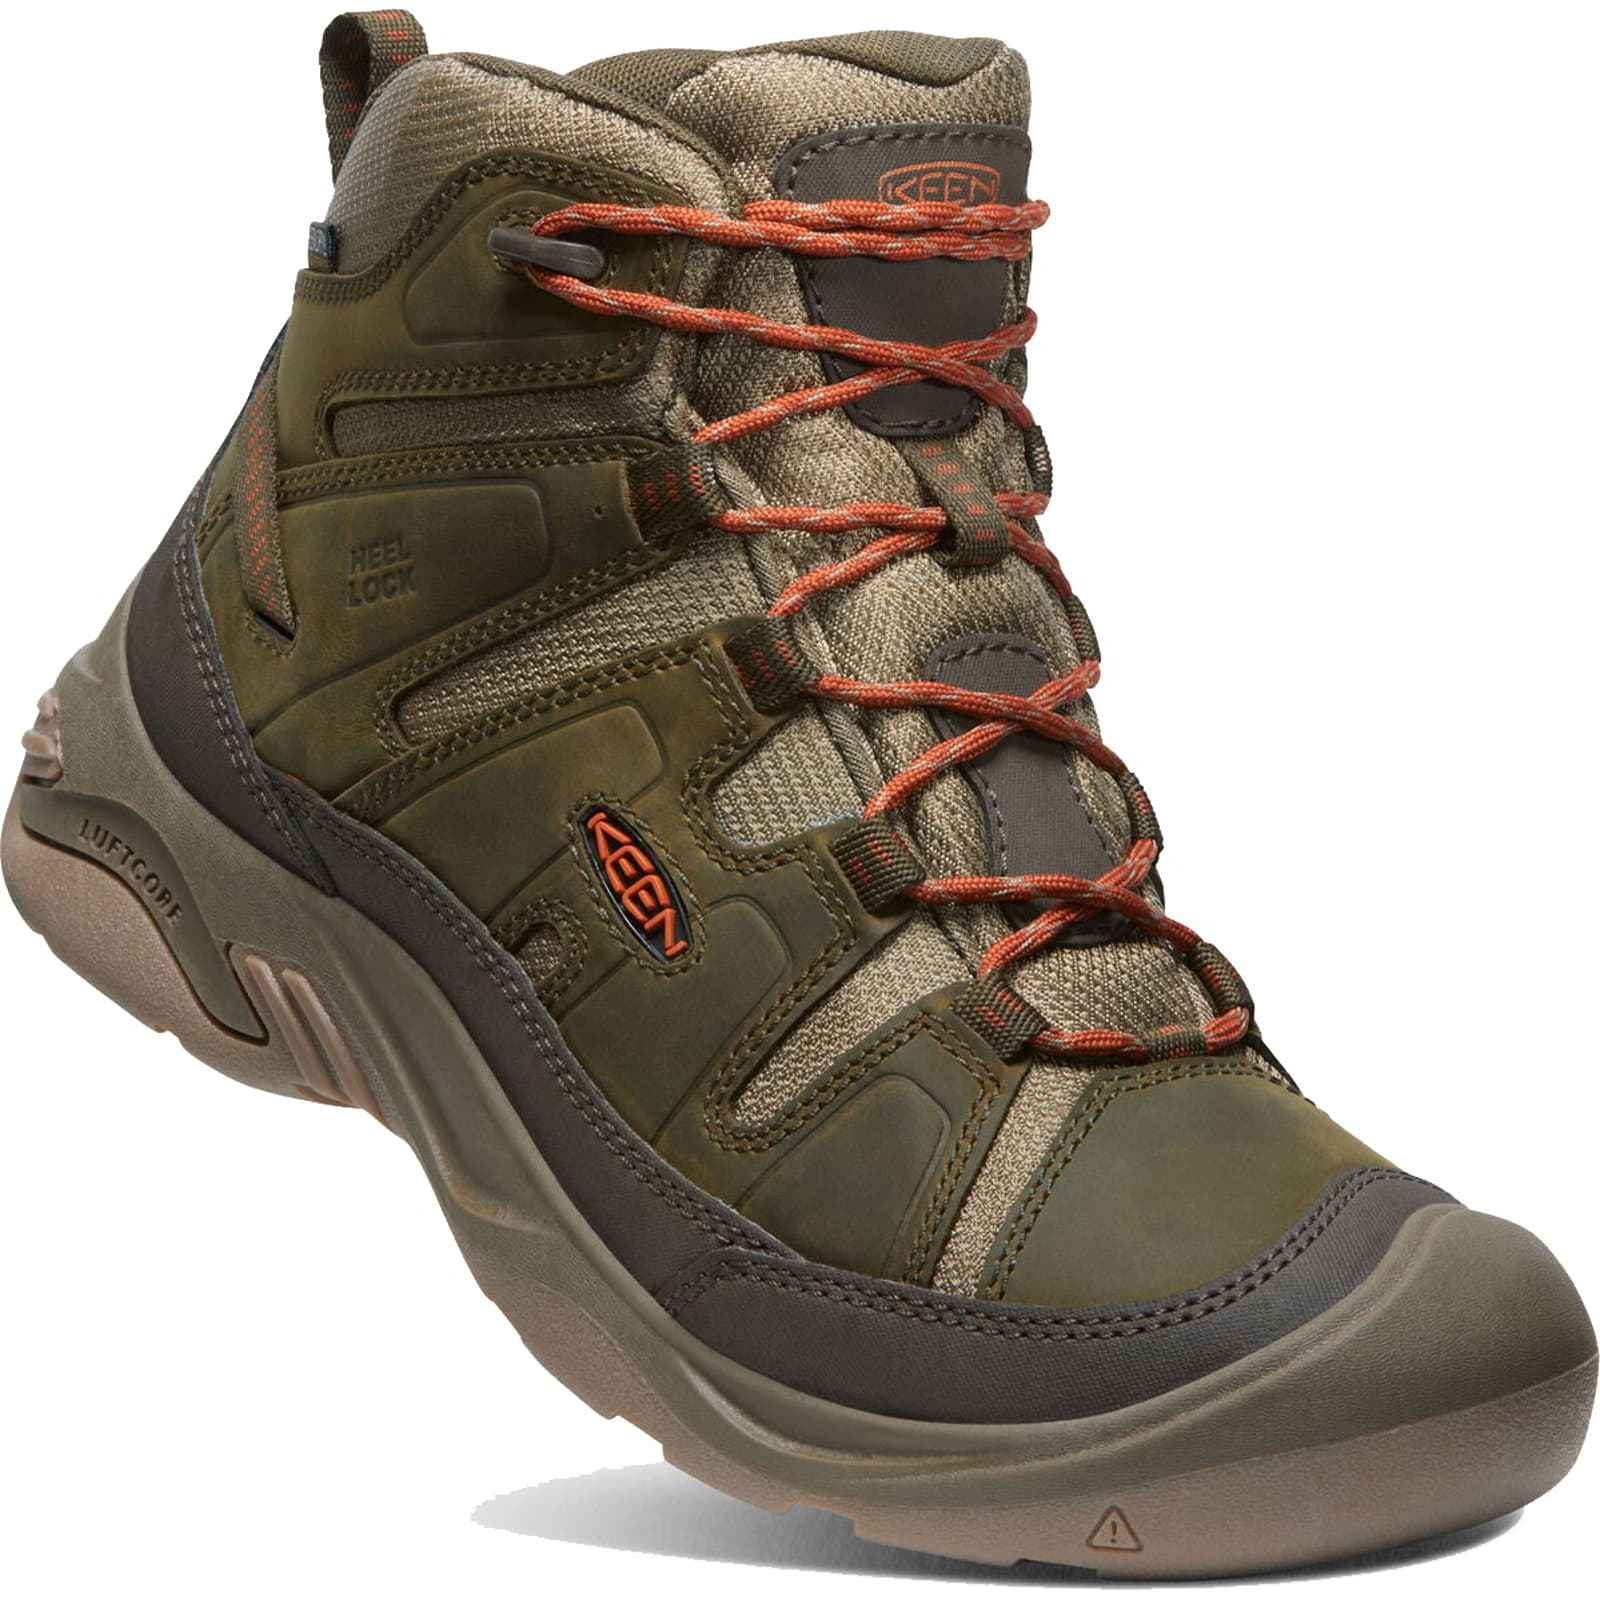 Keen Men's Circadia Mid Waterproof Walking Hiking Boots  - UK 9 / EU 43 / US 10